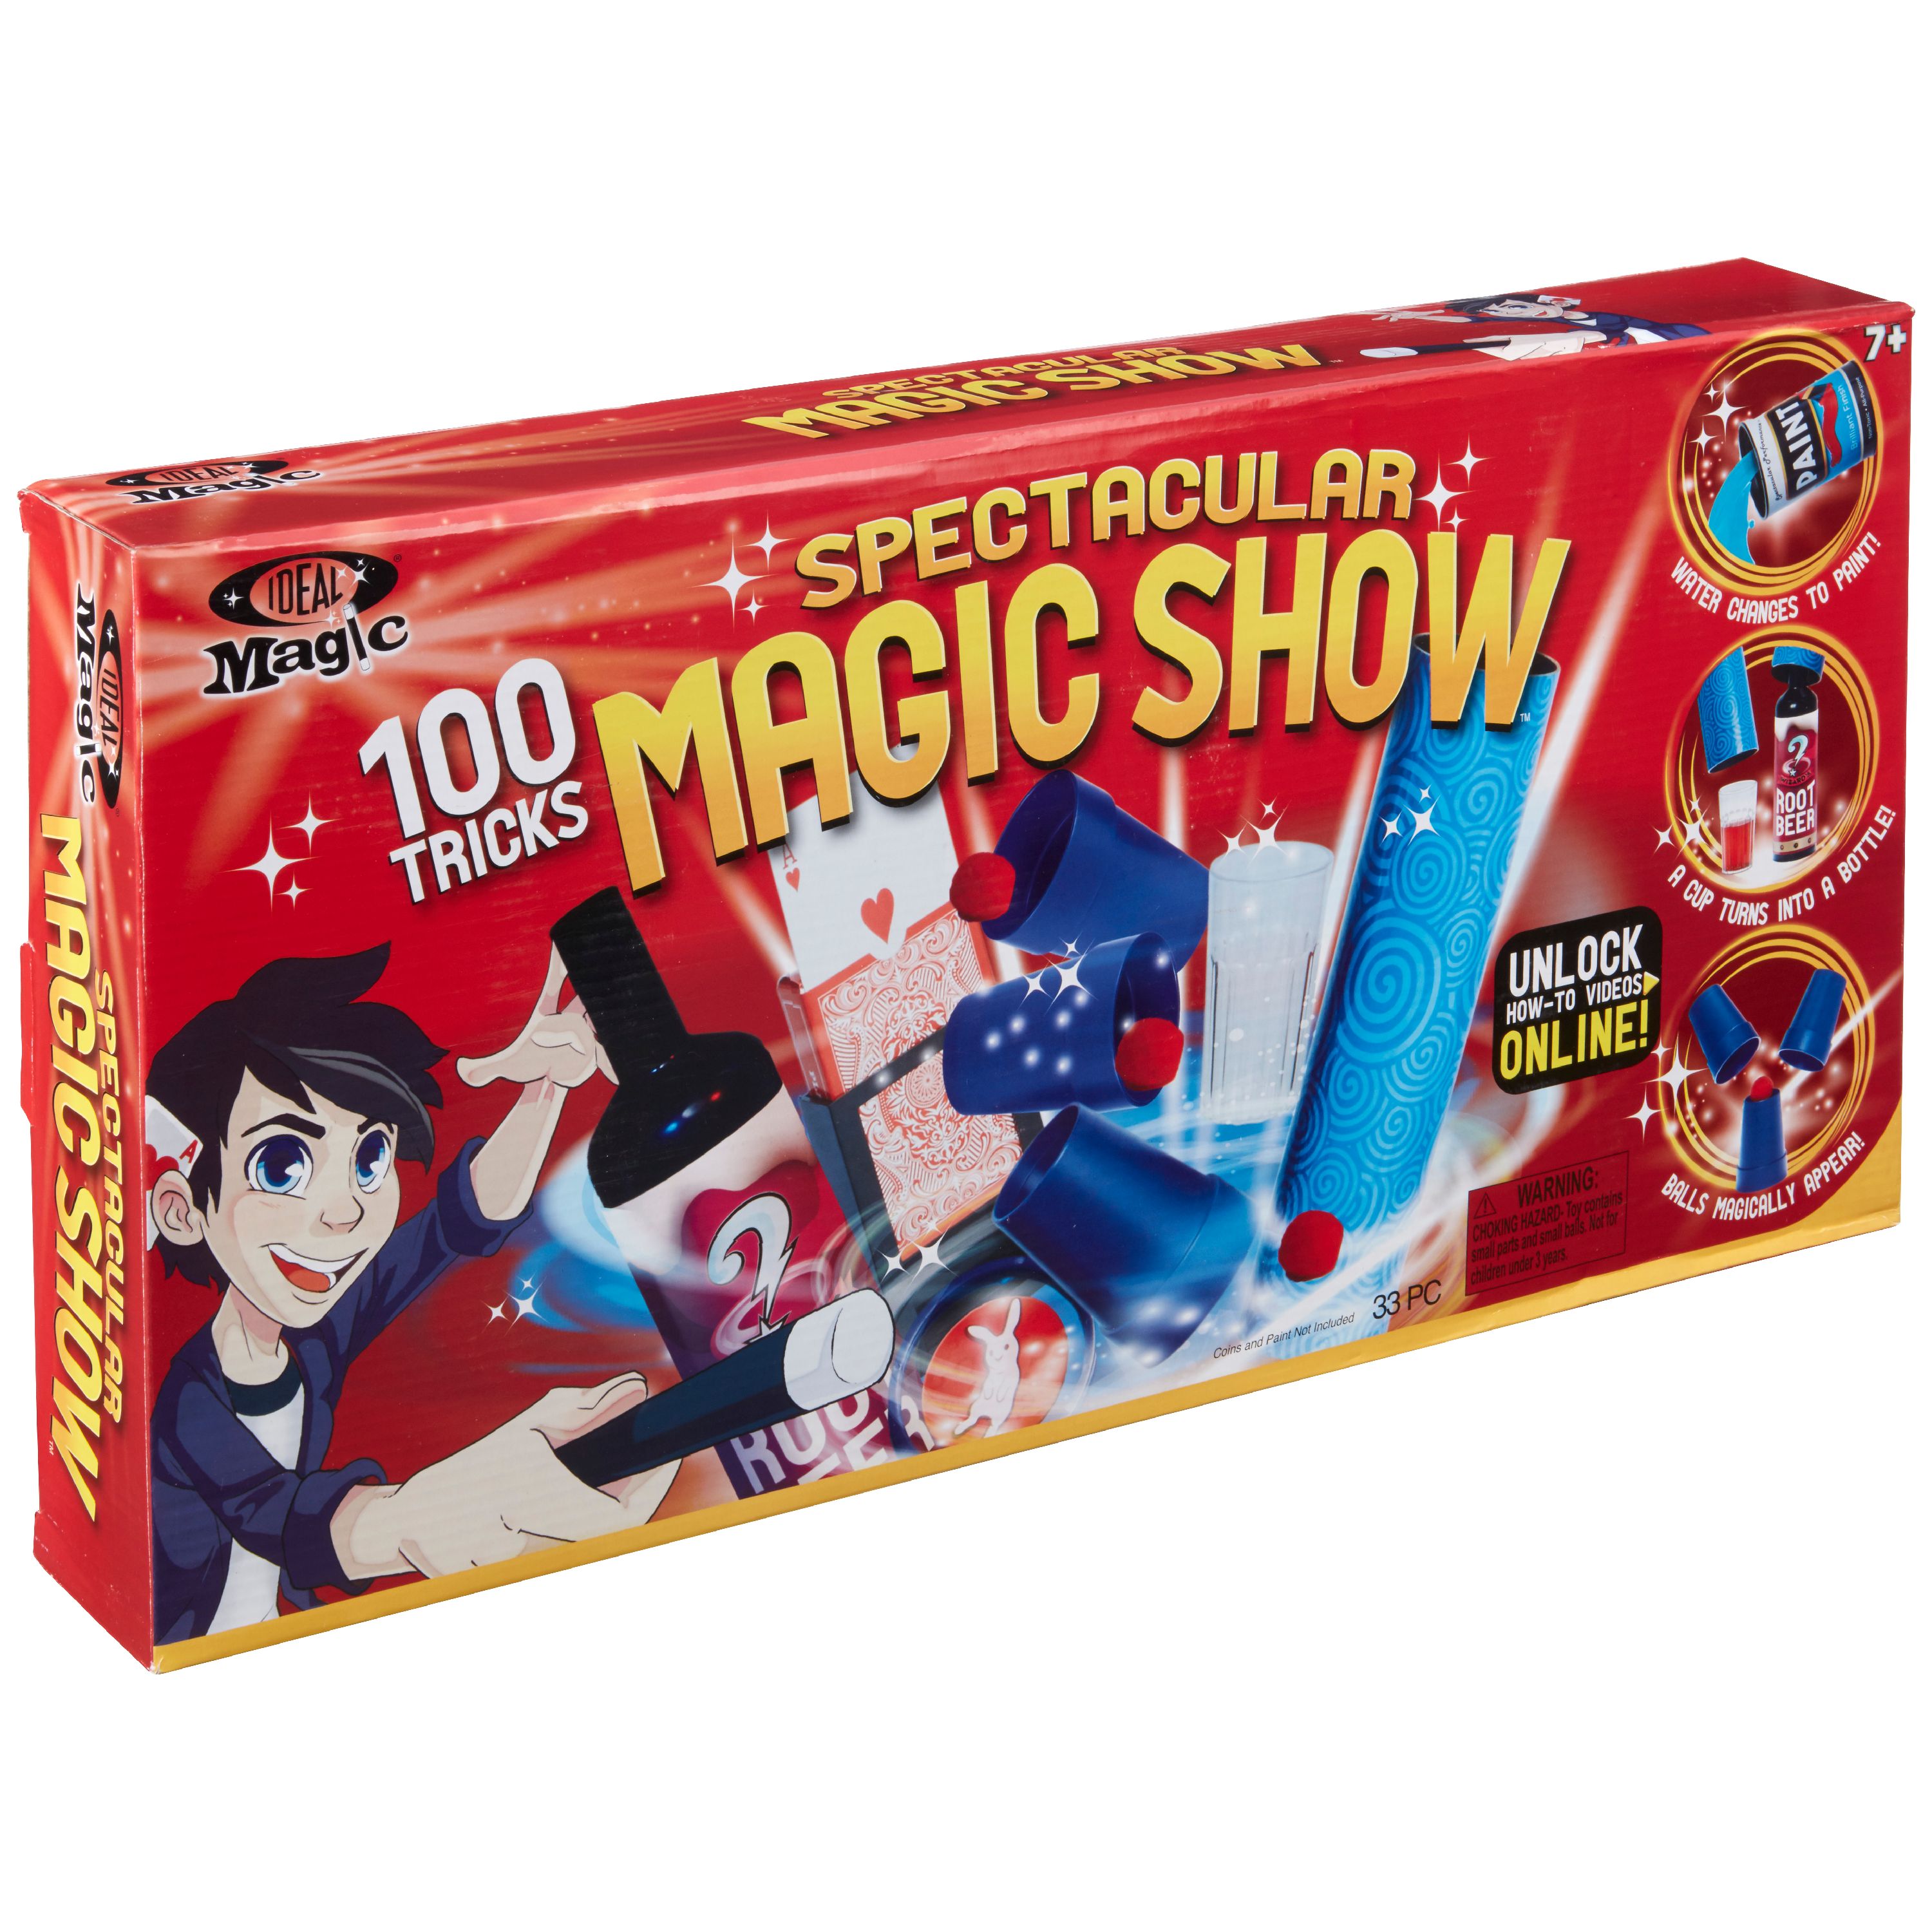 Ideal Magic Spectacular Magic Show Set - image 1 of 3